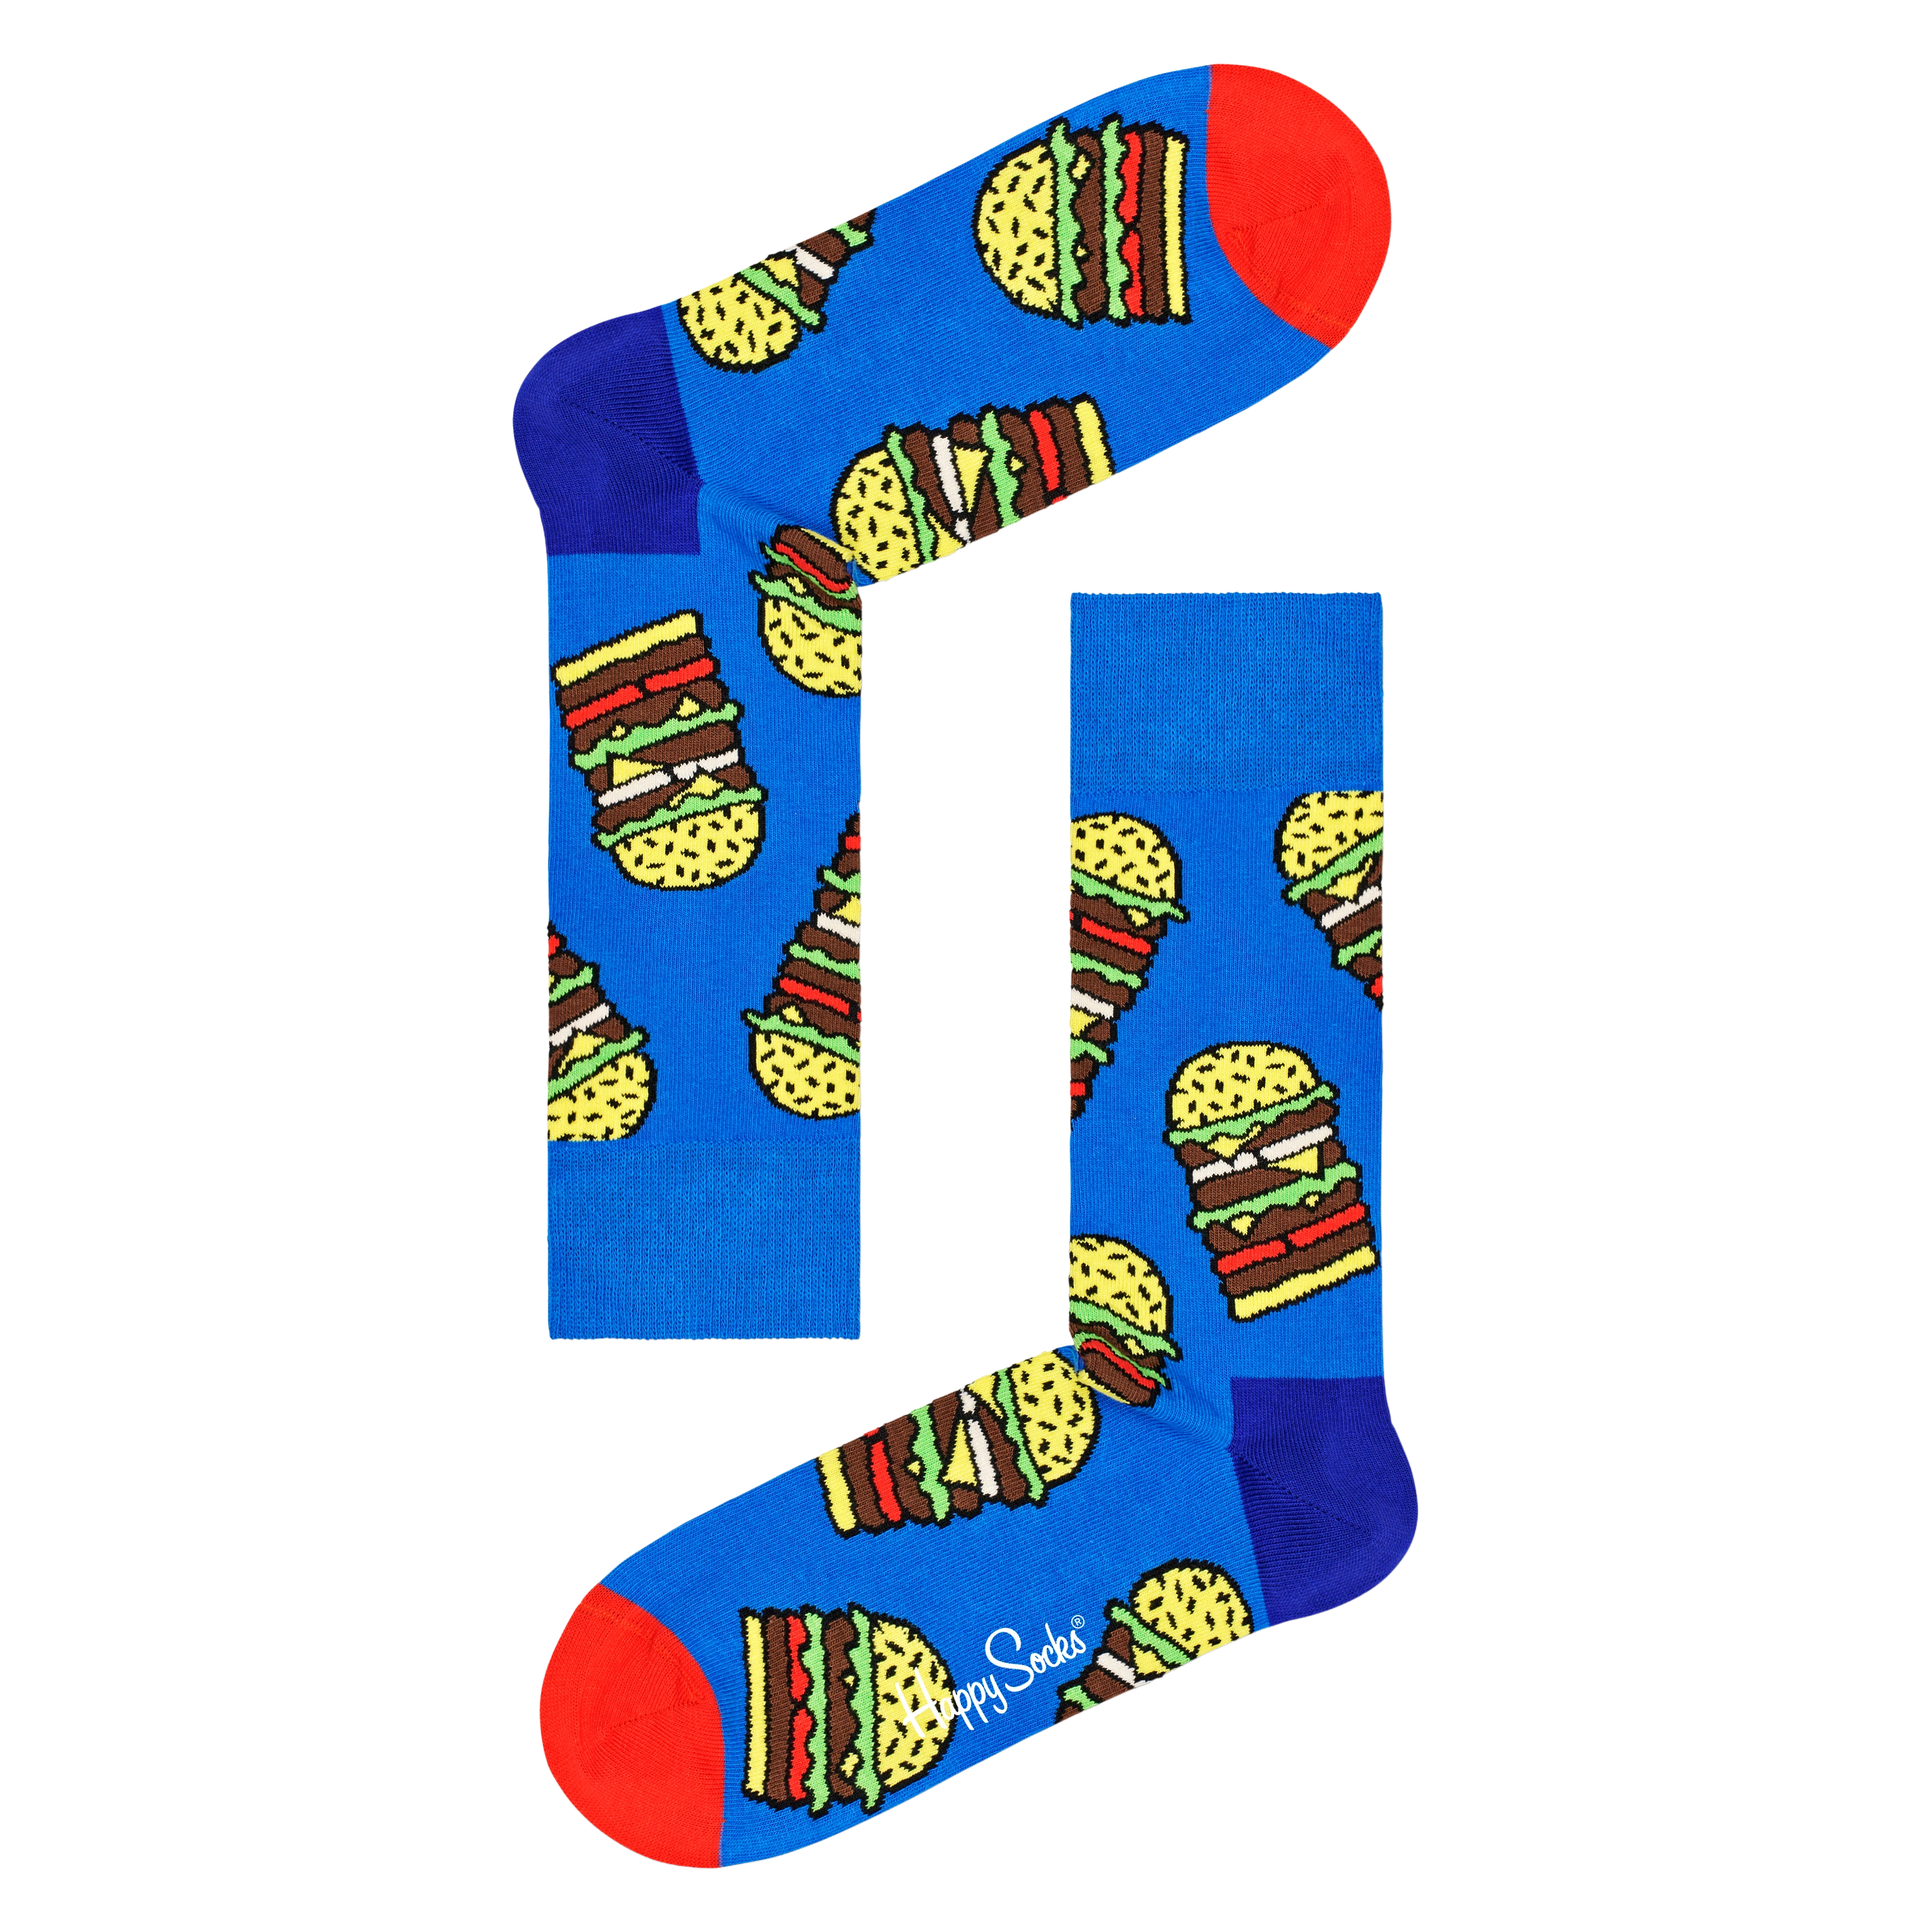 Happy Socks Burger Sock for Men